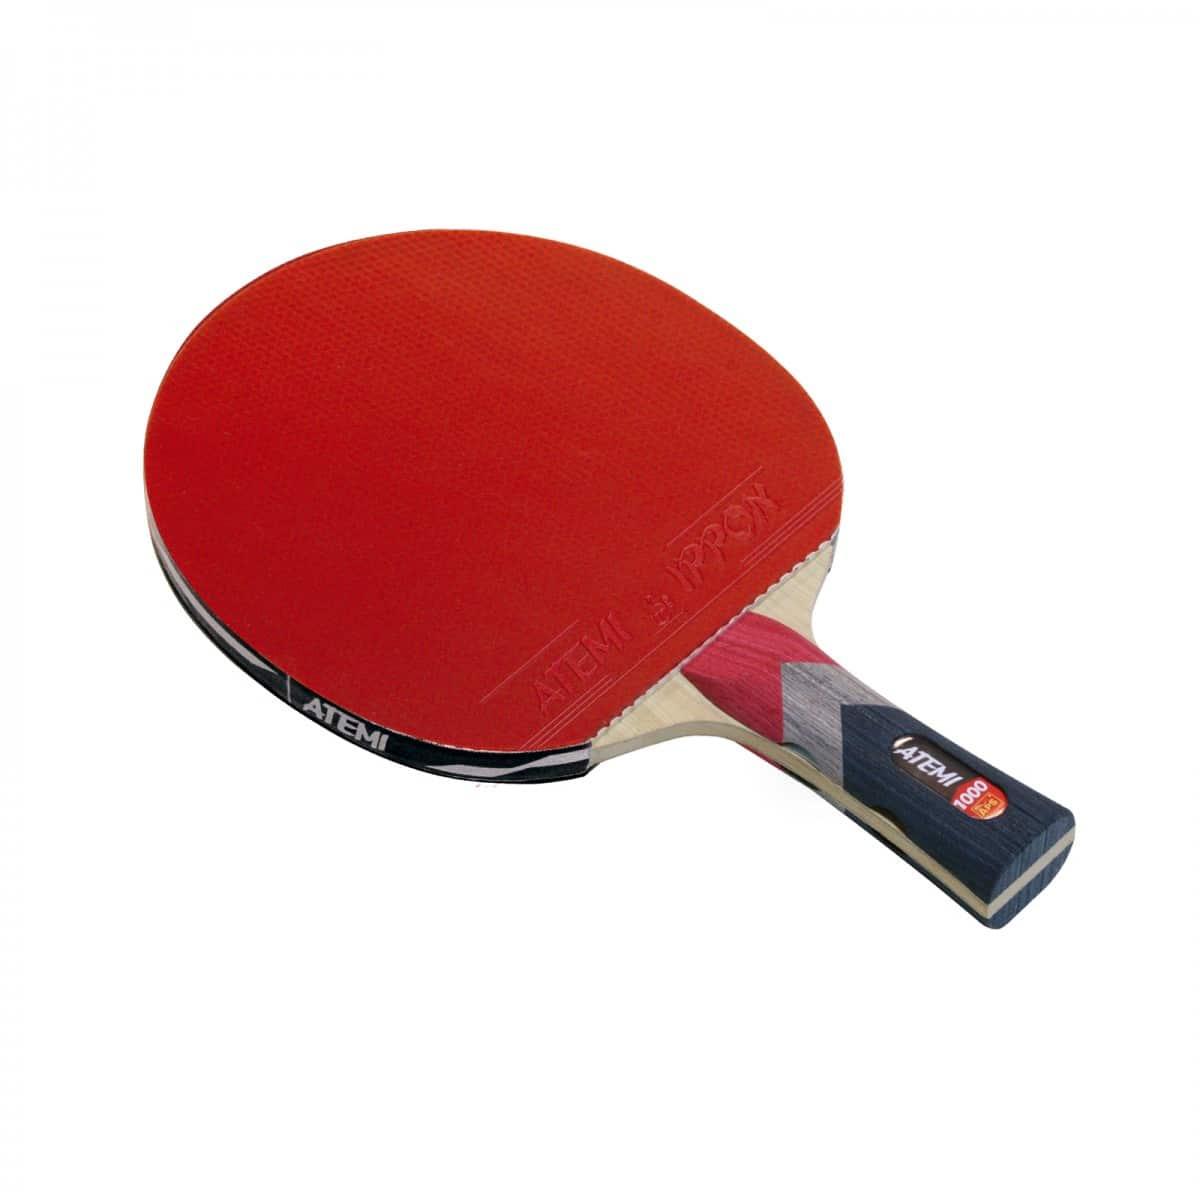 Atemi 1000 Table Tennis Bat